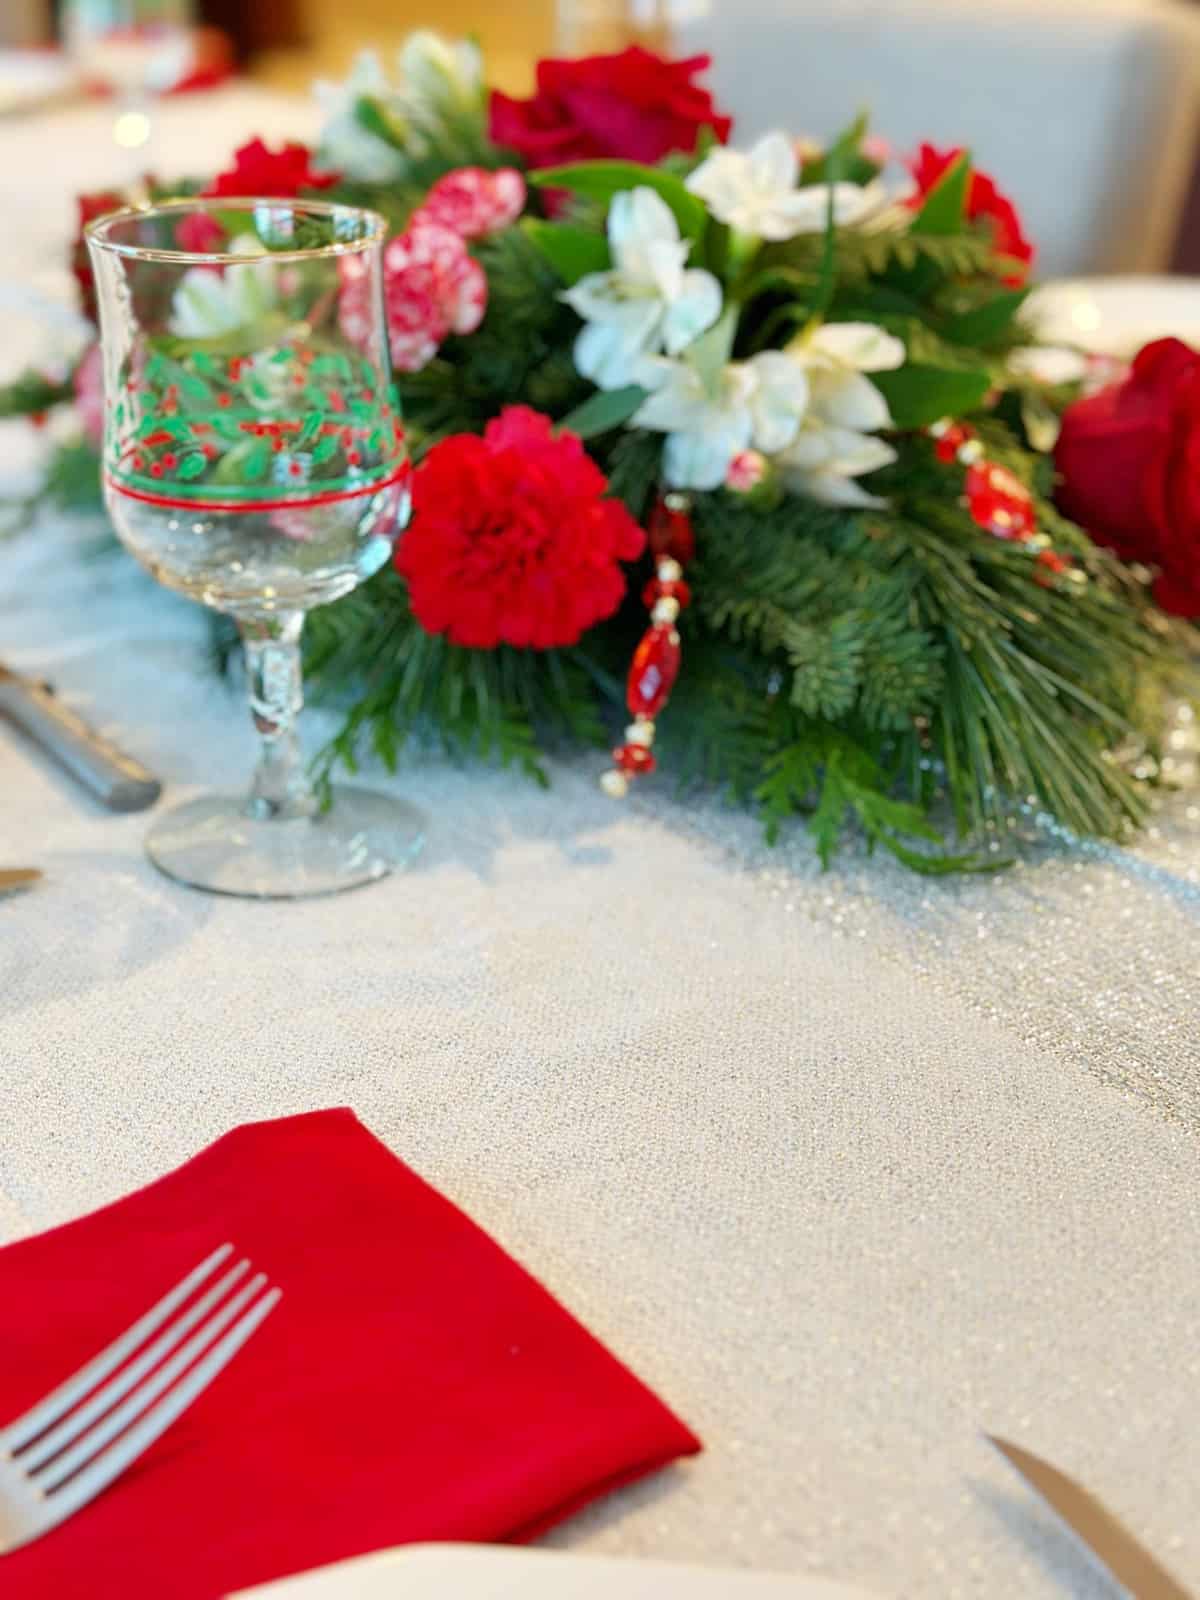 Christmas floral arrangement on table